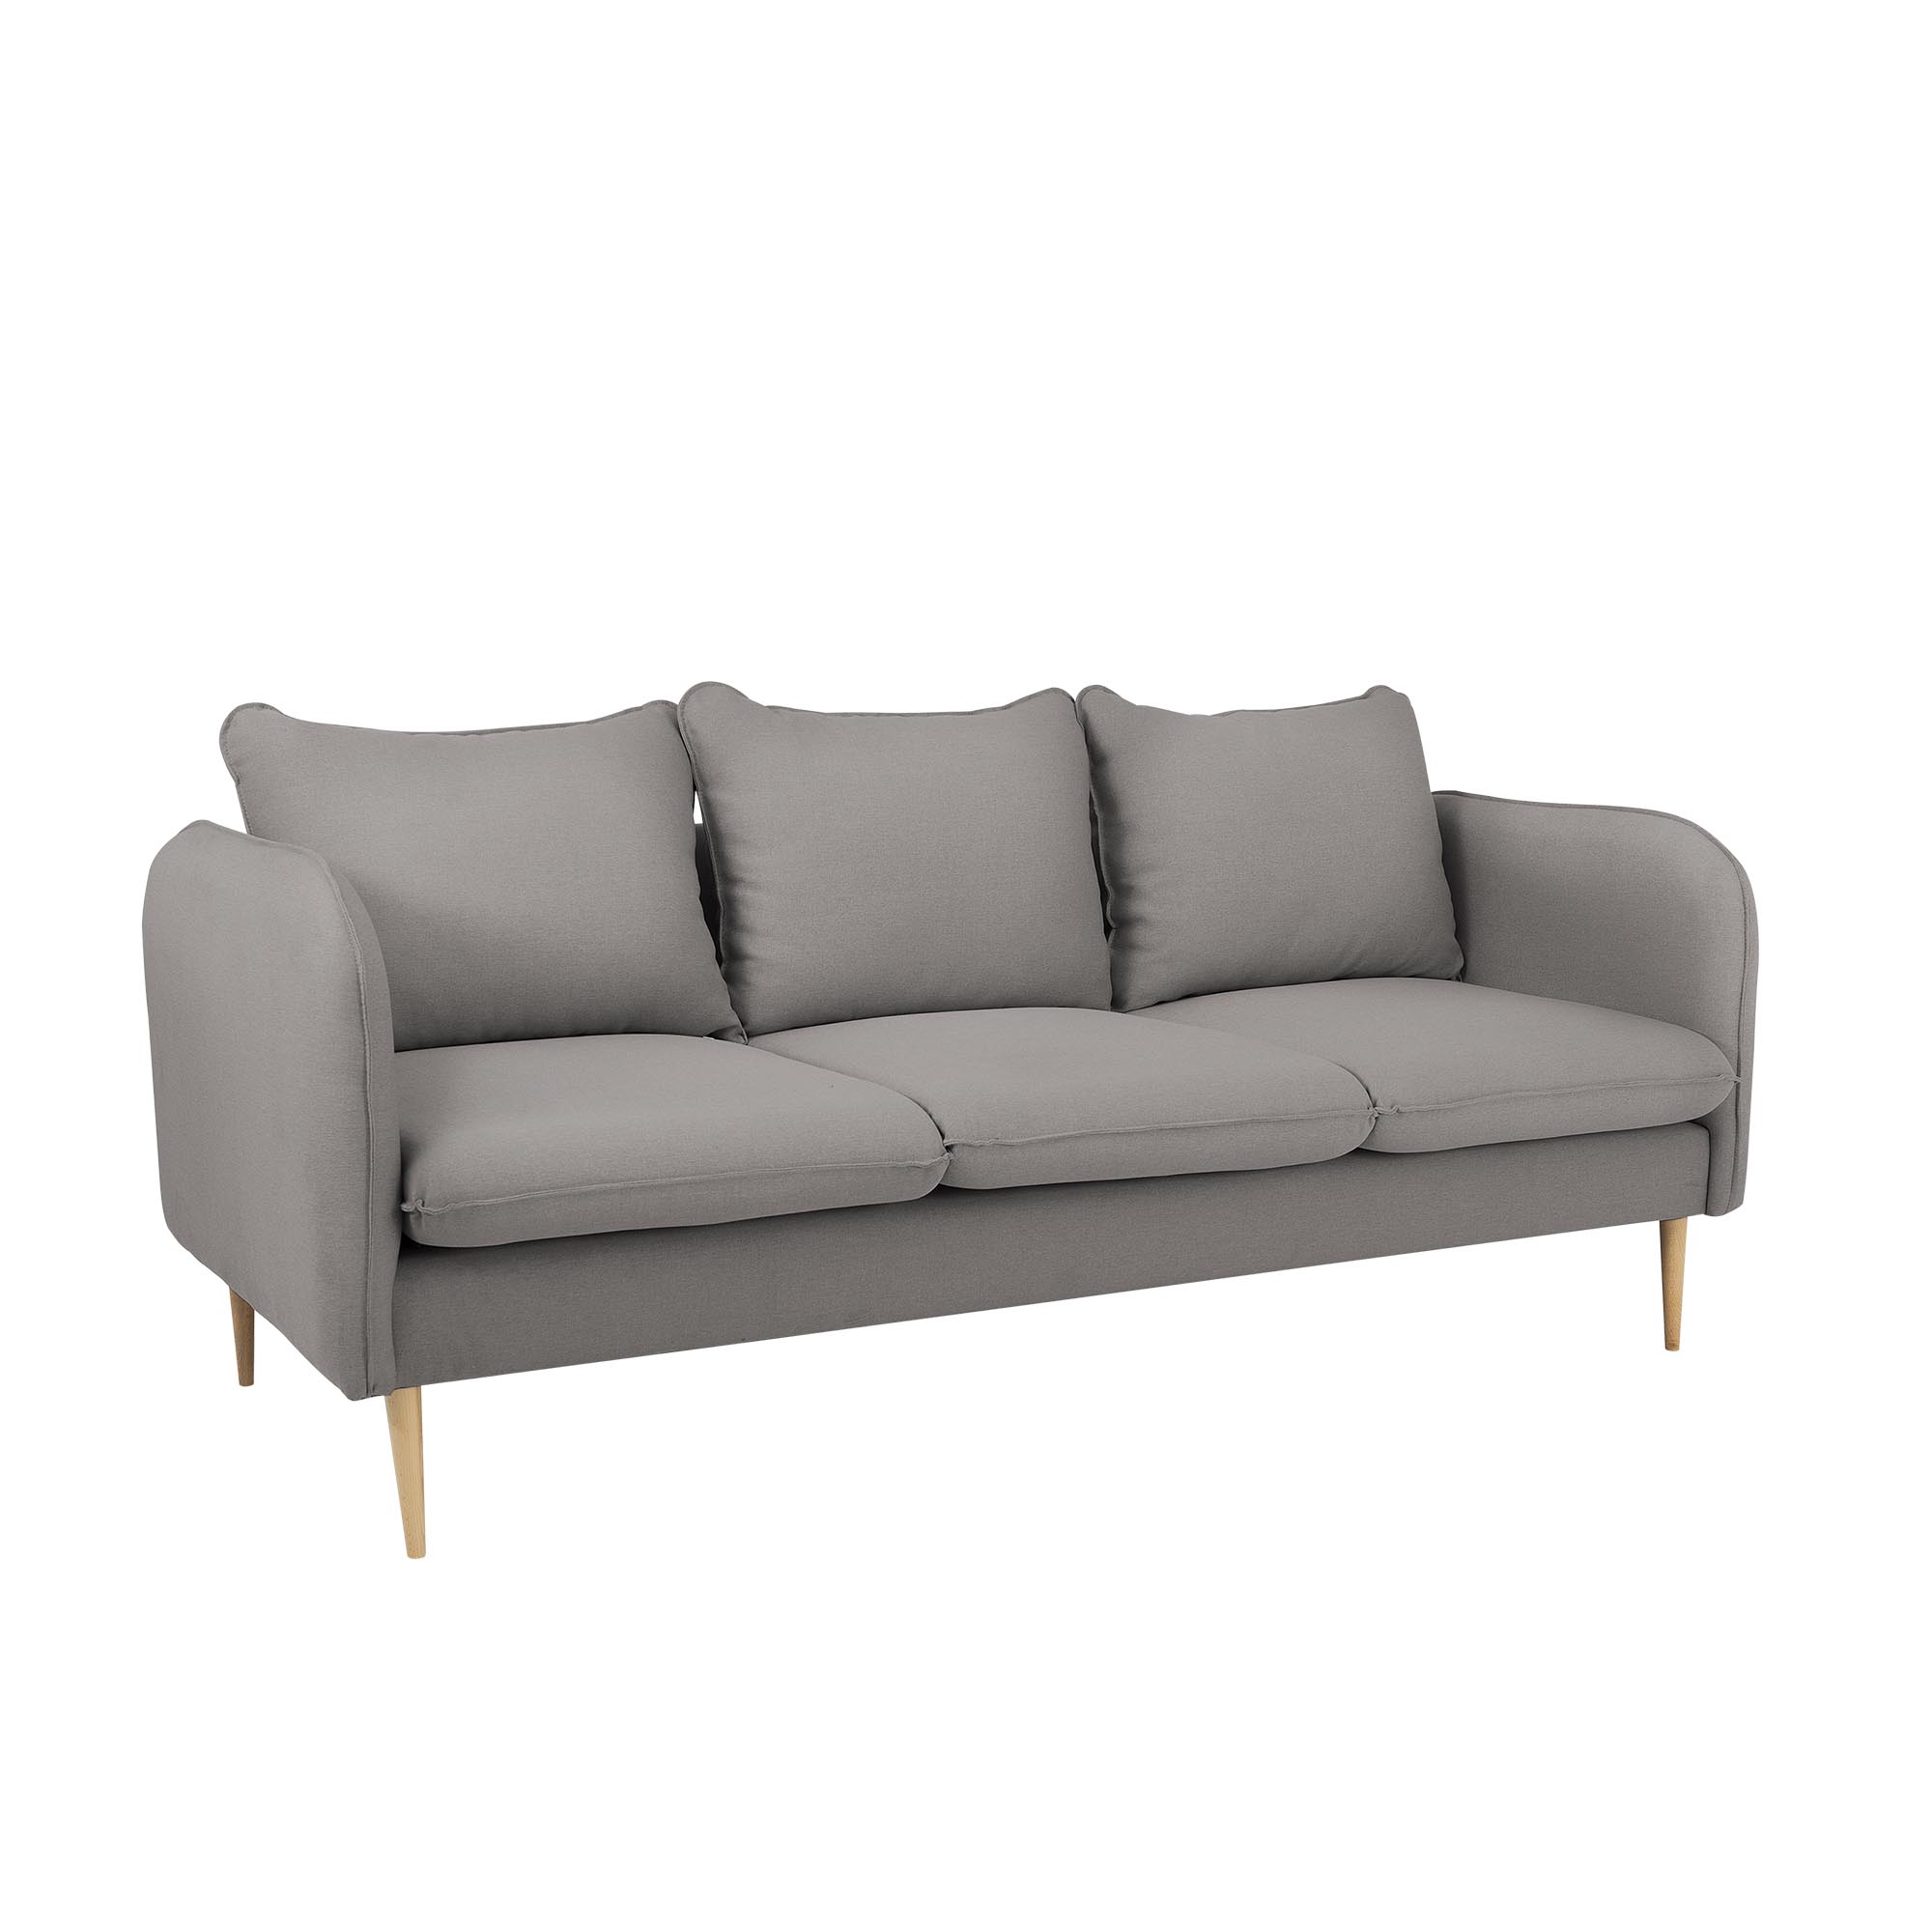 POSH WOOD Sofa 3 Seaters upholstery colour steel grey